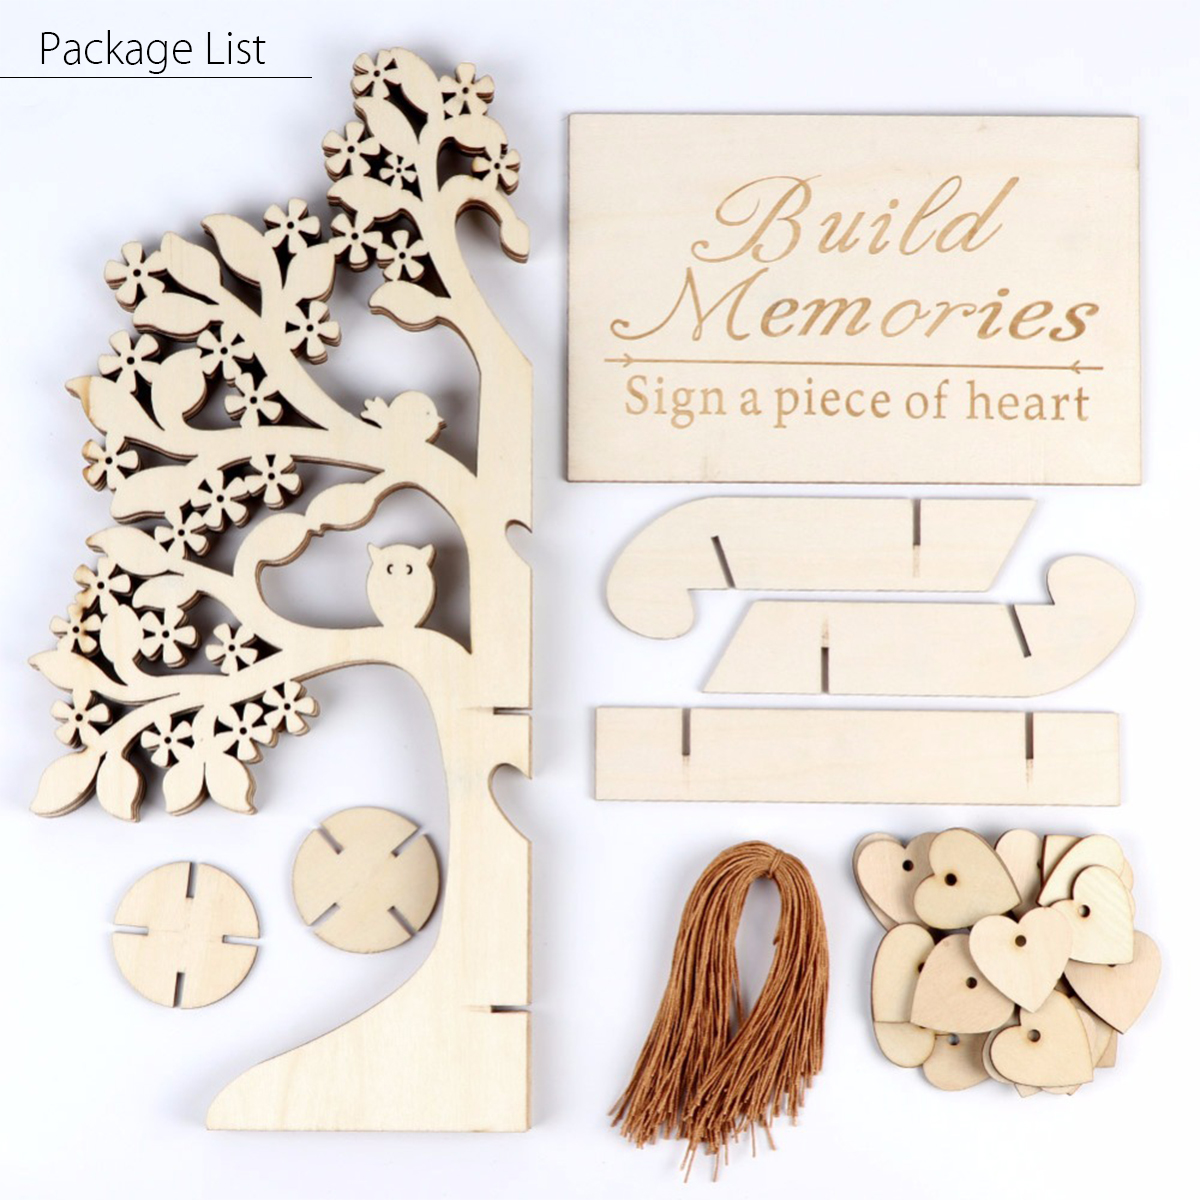 DIY-Wedding-Book-Tree-Marriage-Guest-Book-Wooden-Tree-Hearts-Pendant-Drop-Ornaments-Decorations-1468183-2